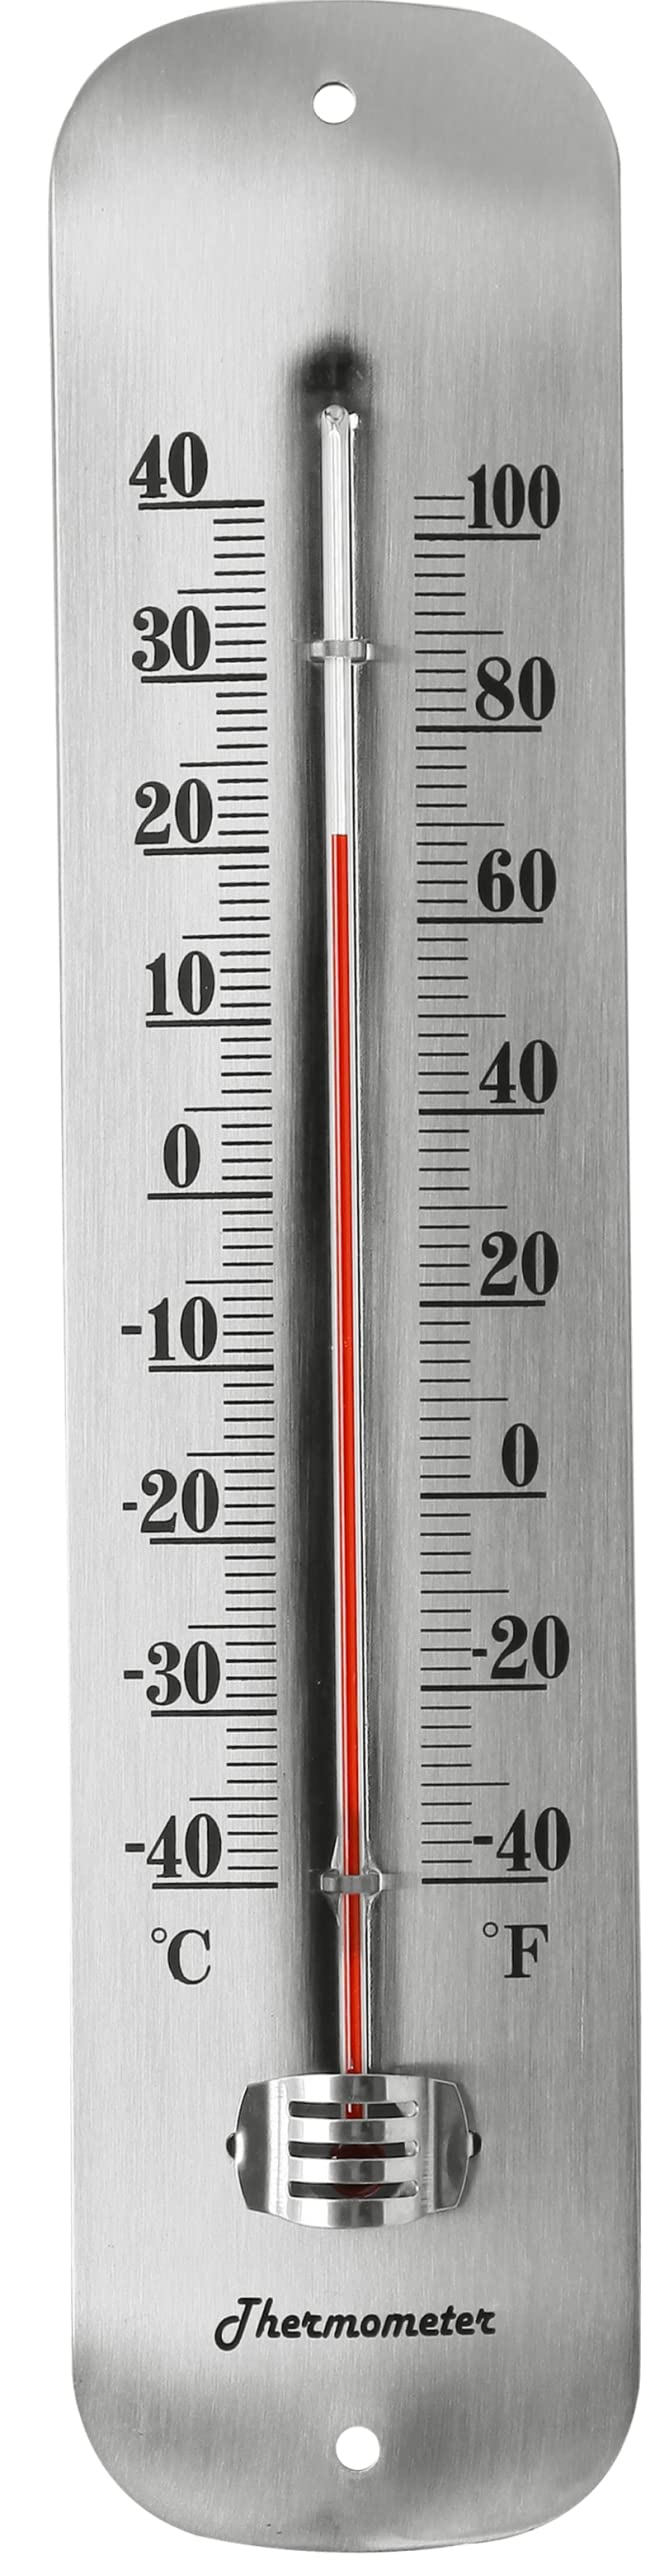 Wireless Indoor Outdoor Thermometers